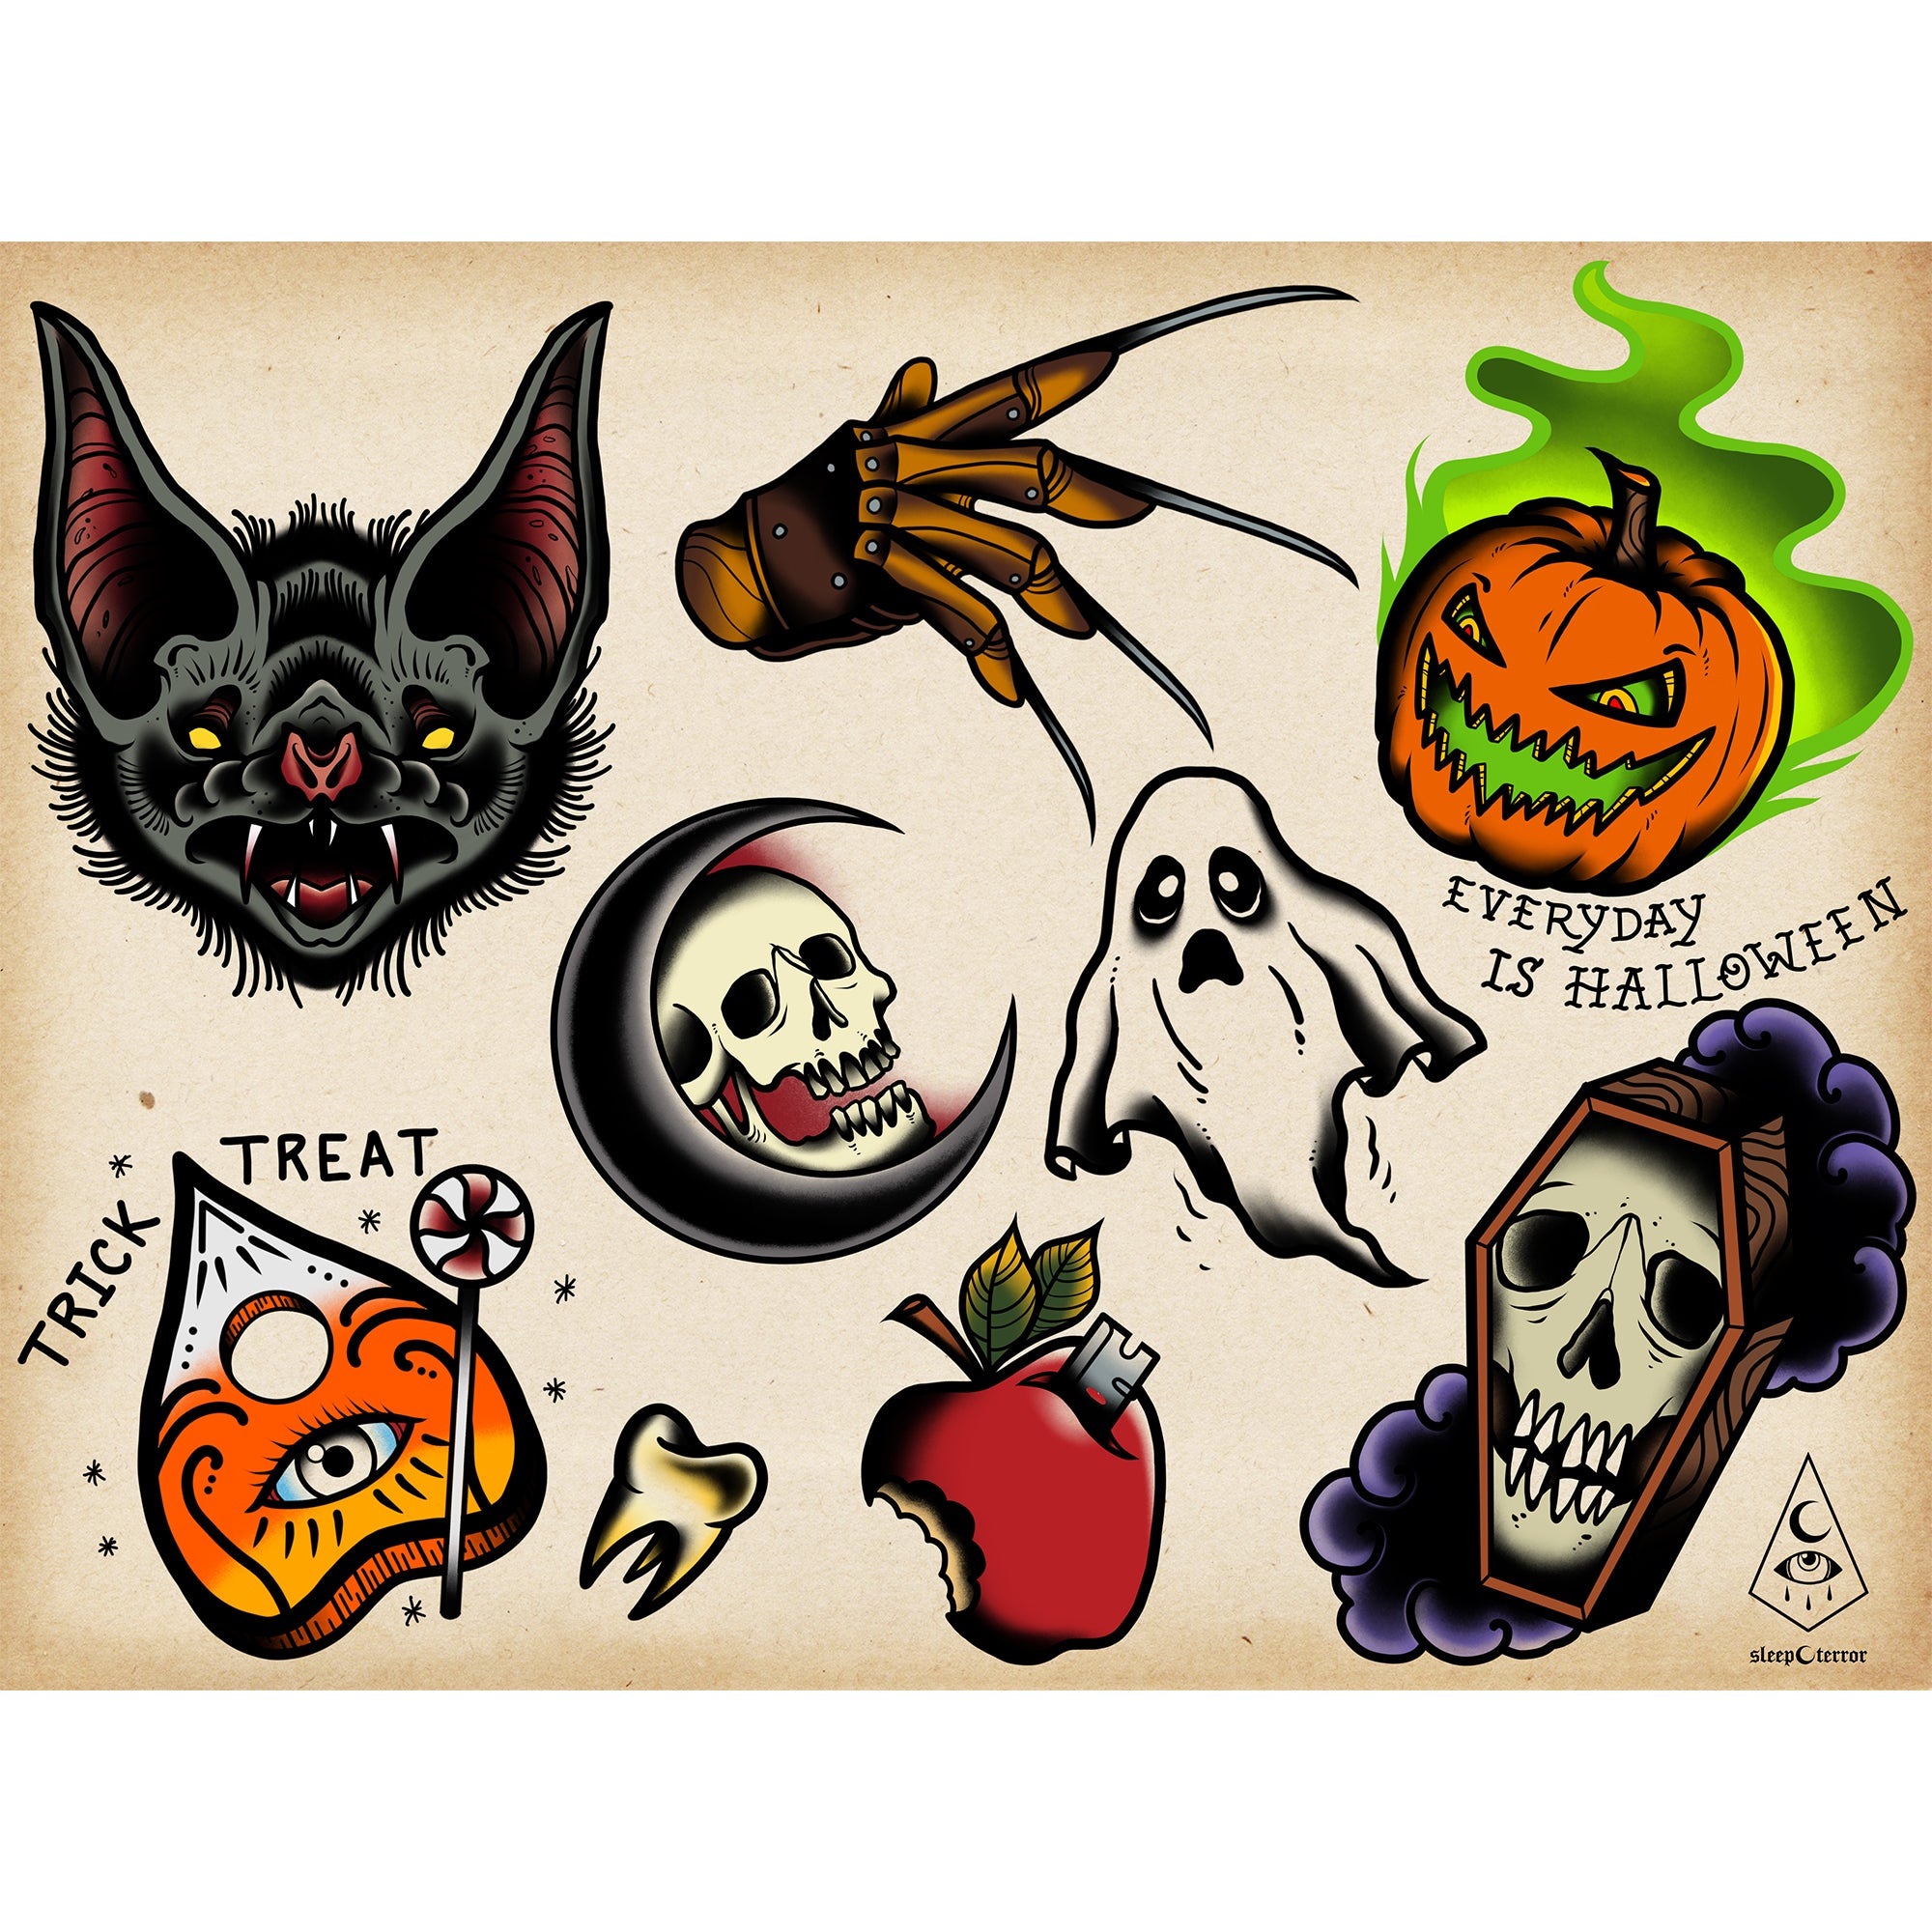 Every Day Is Halloween Tattoo Flash Sheet  Sleep Terror Co Horror  Clothing  Sleep Terror Clothing